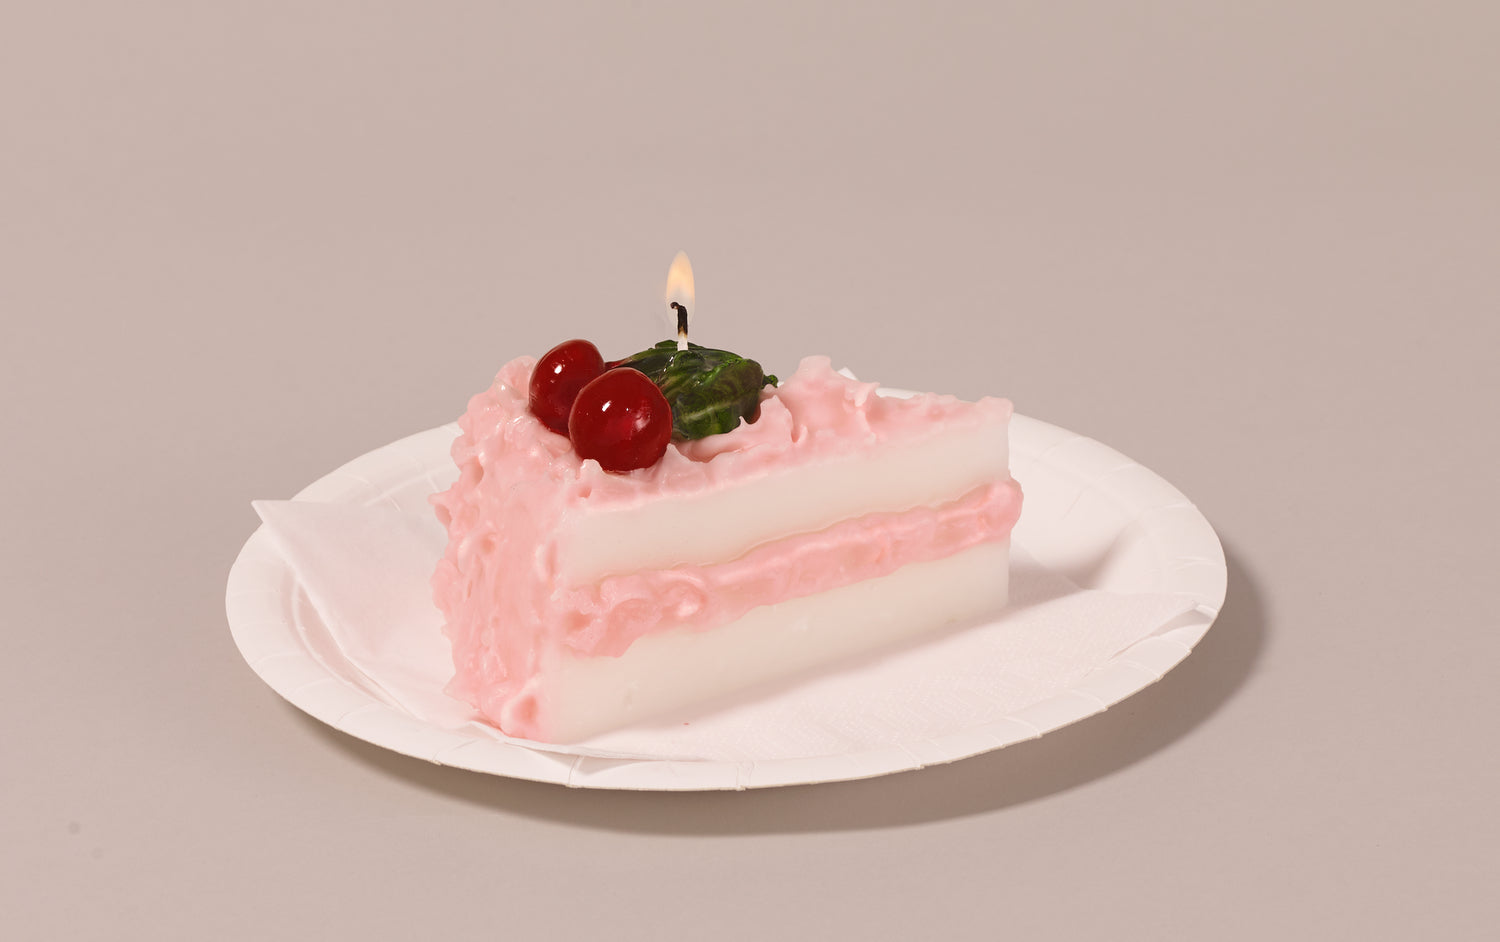 John Wick cake design - everything is edible : r/cakedecorating